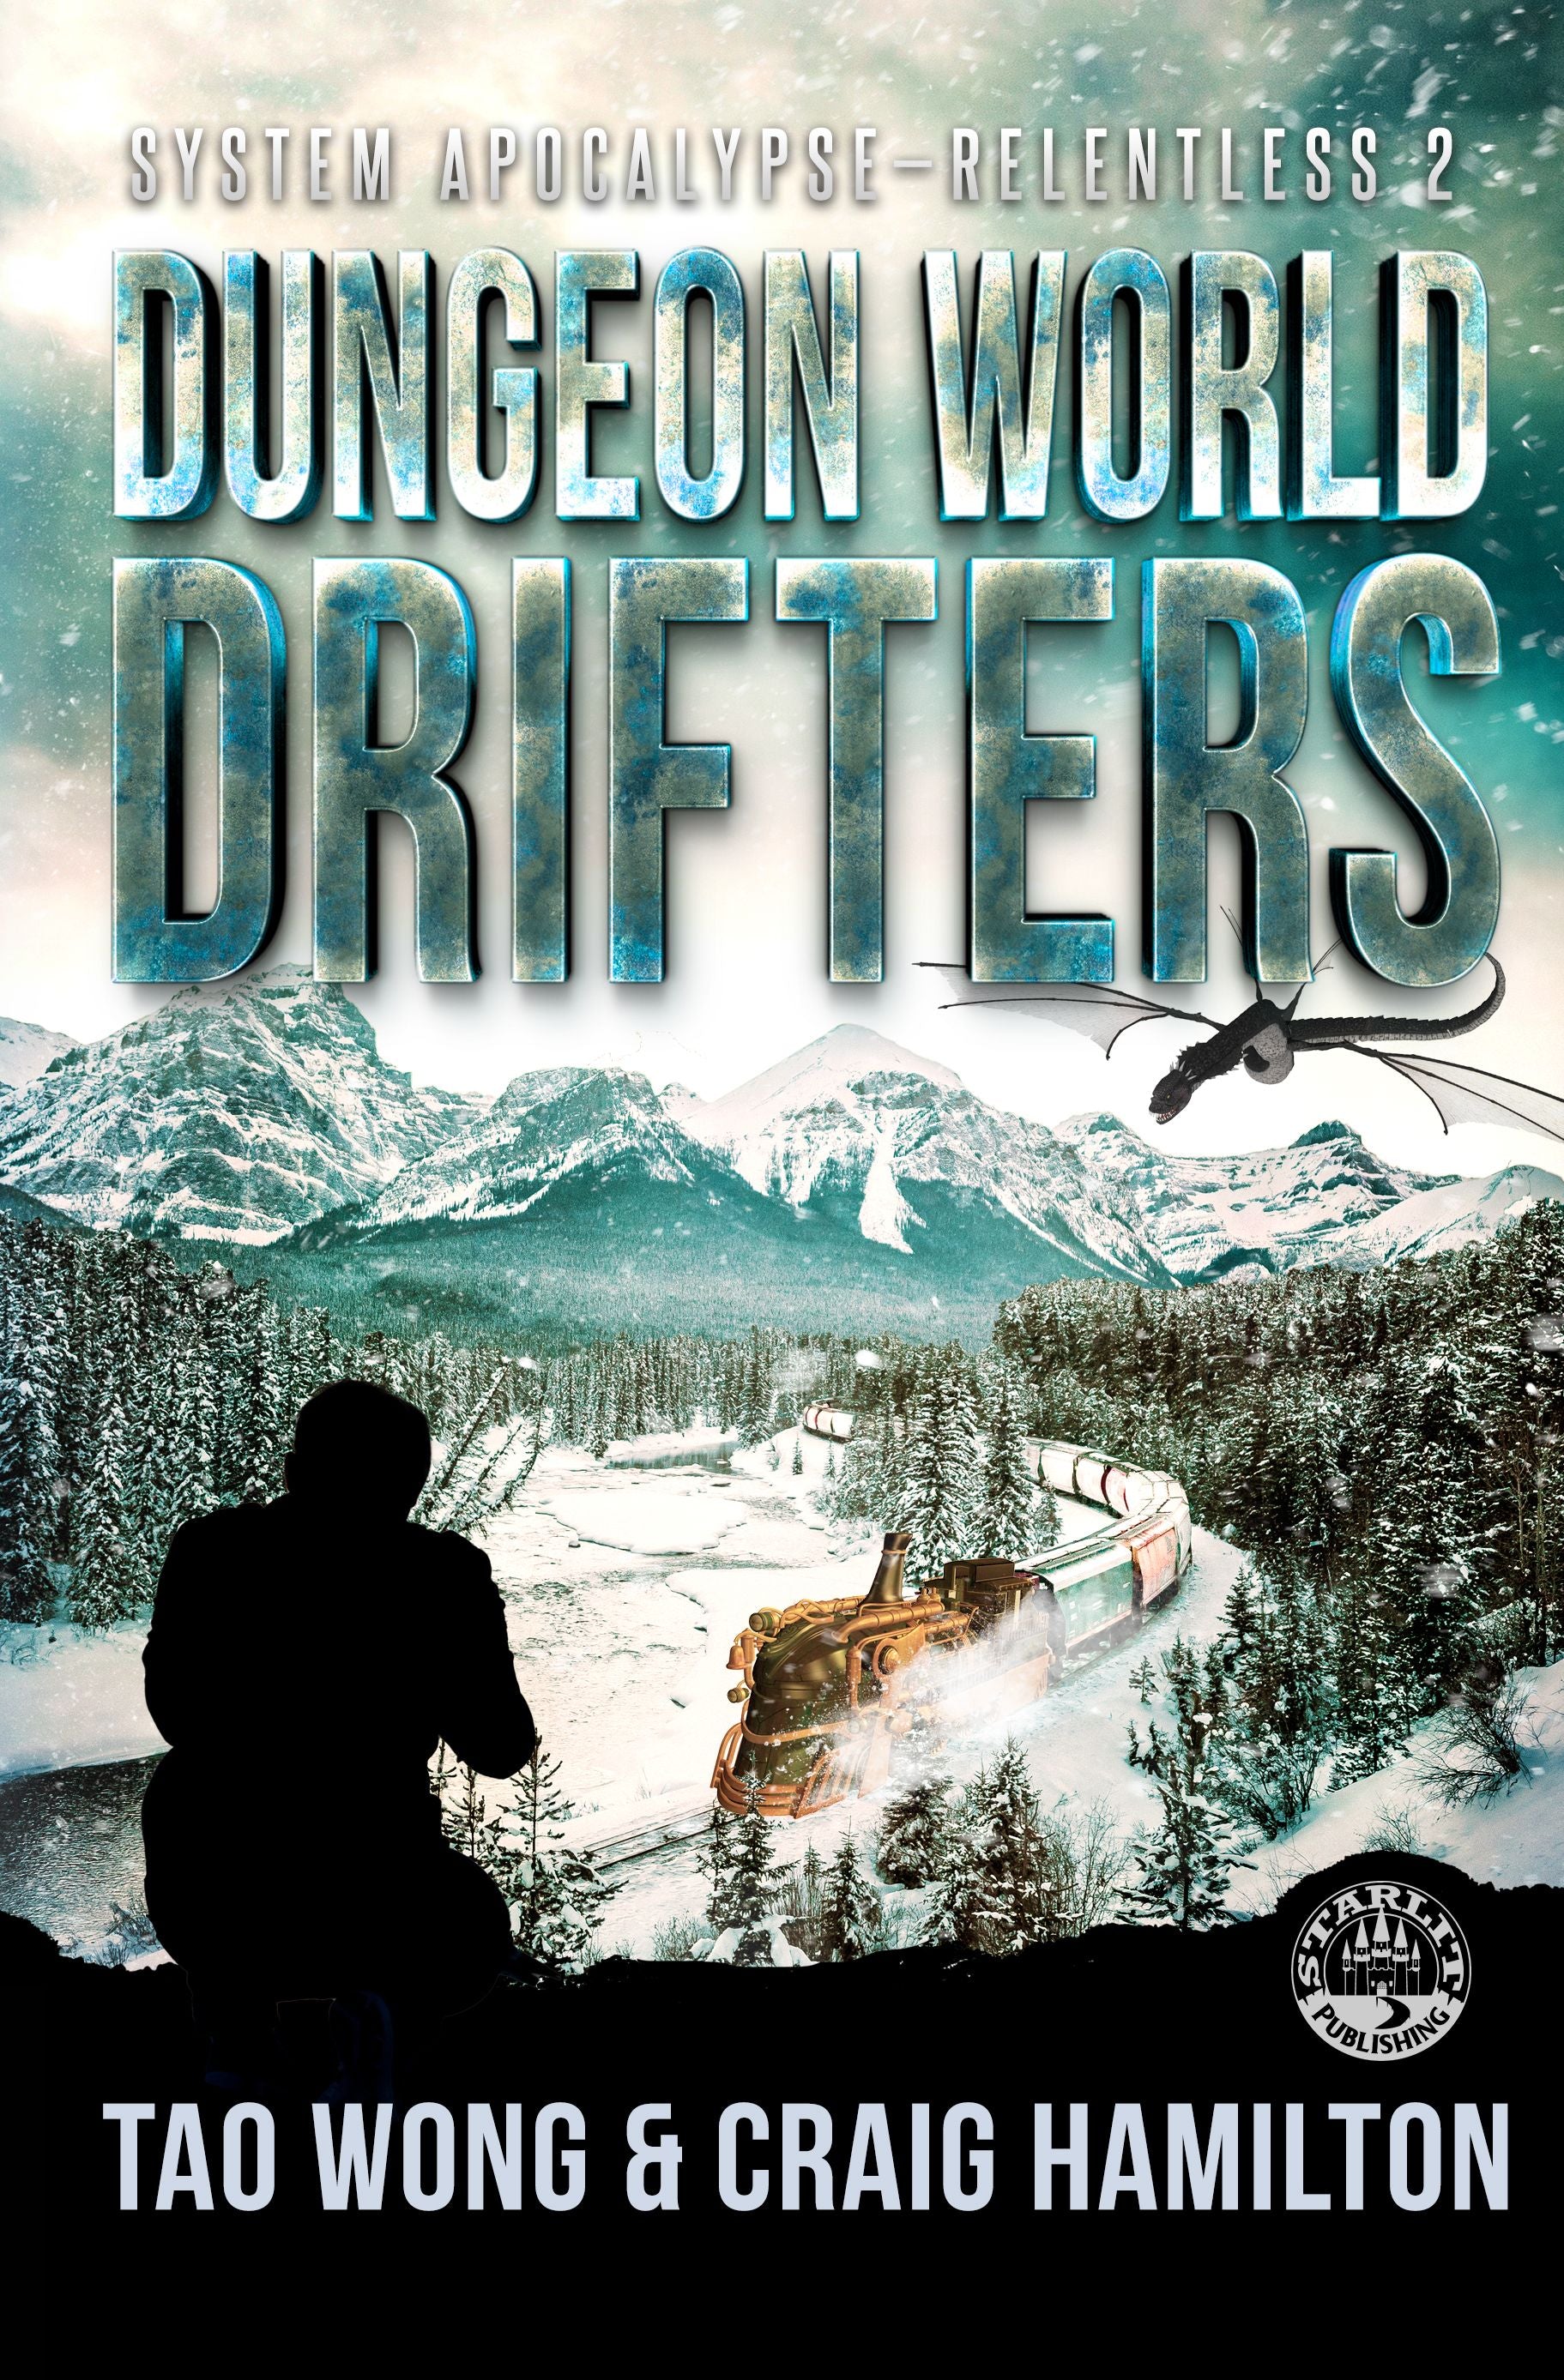 Drifters Volume 4 (Paperback)